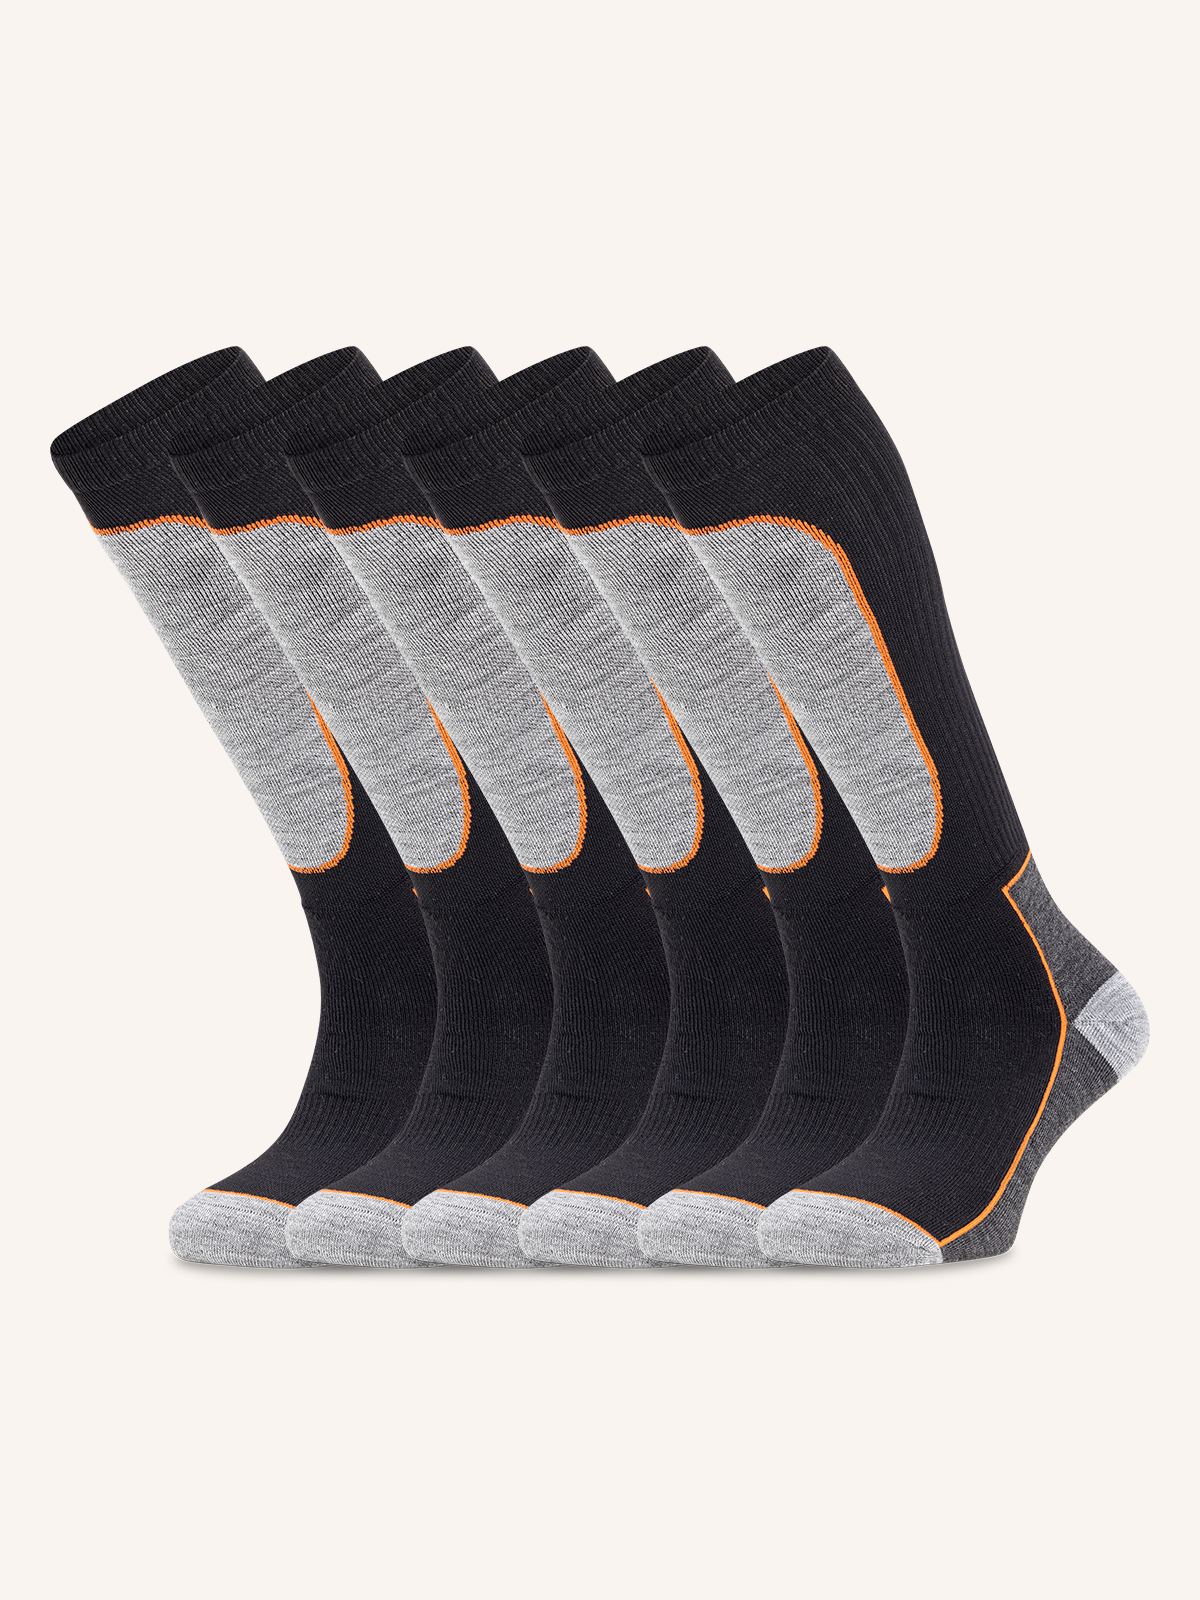 Long Thermal Sock in Resistant Material for Work | Plain Color | Pack of 6 Pairs | JOB 15